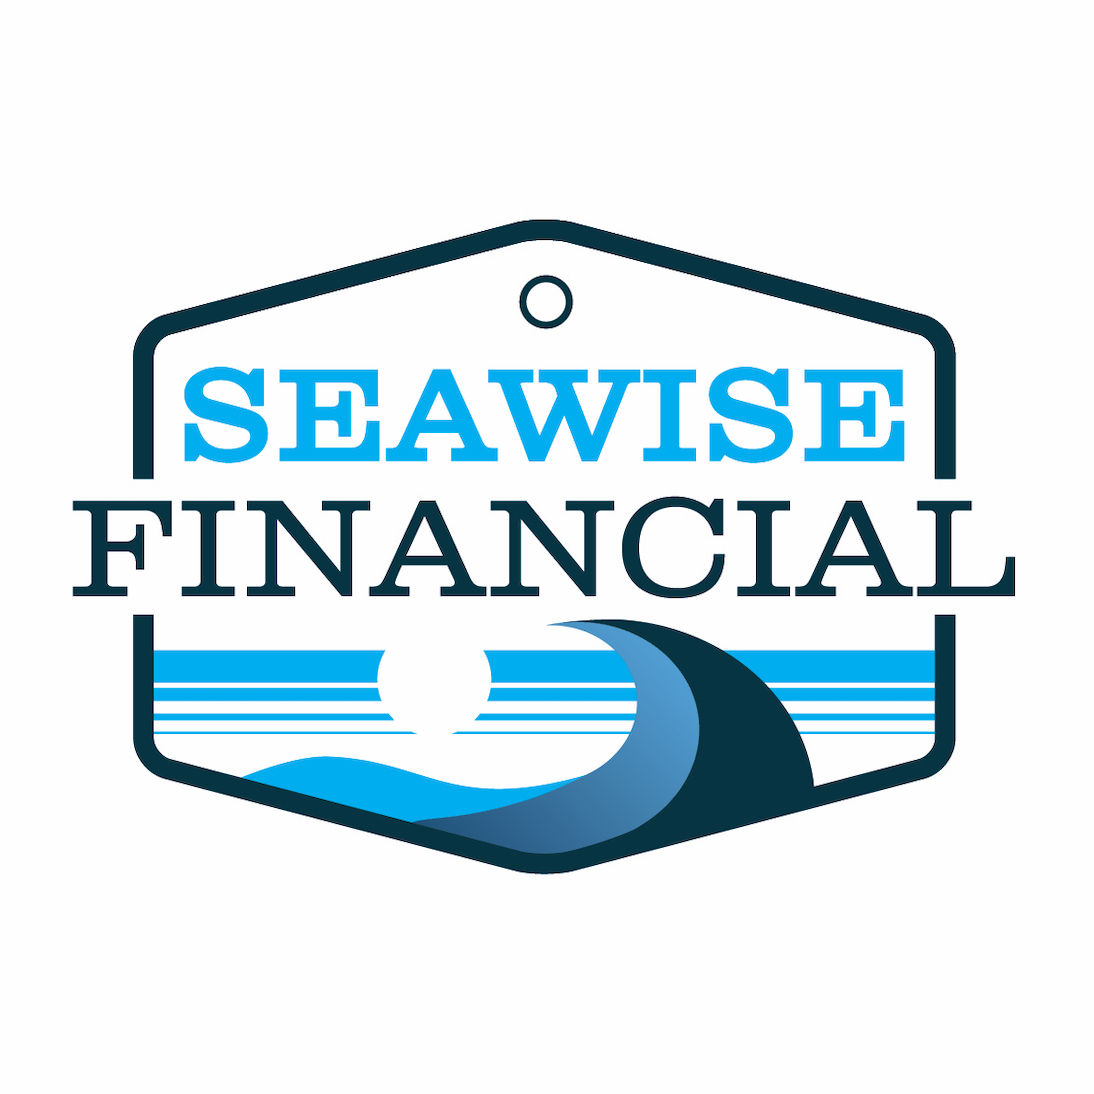 Seawise Financial